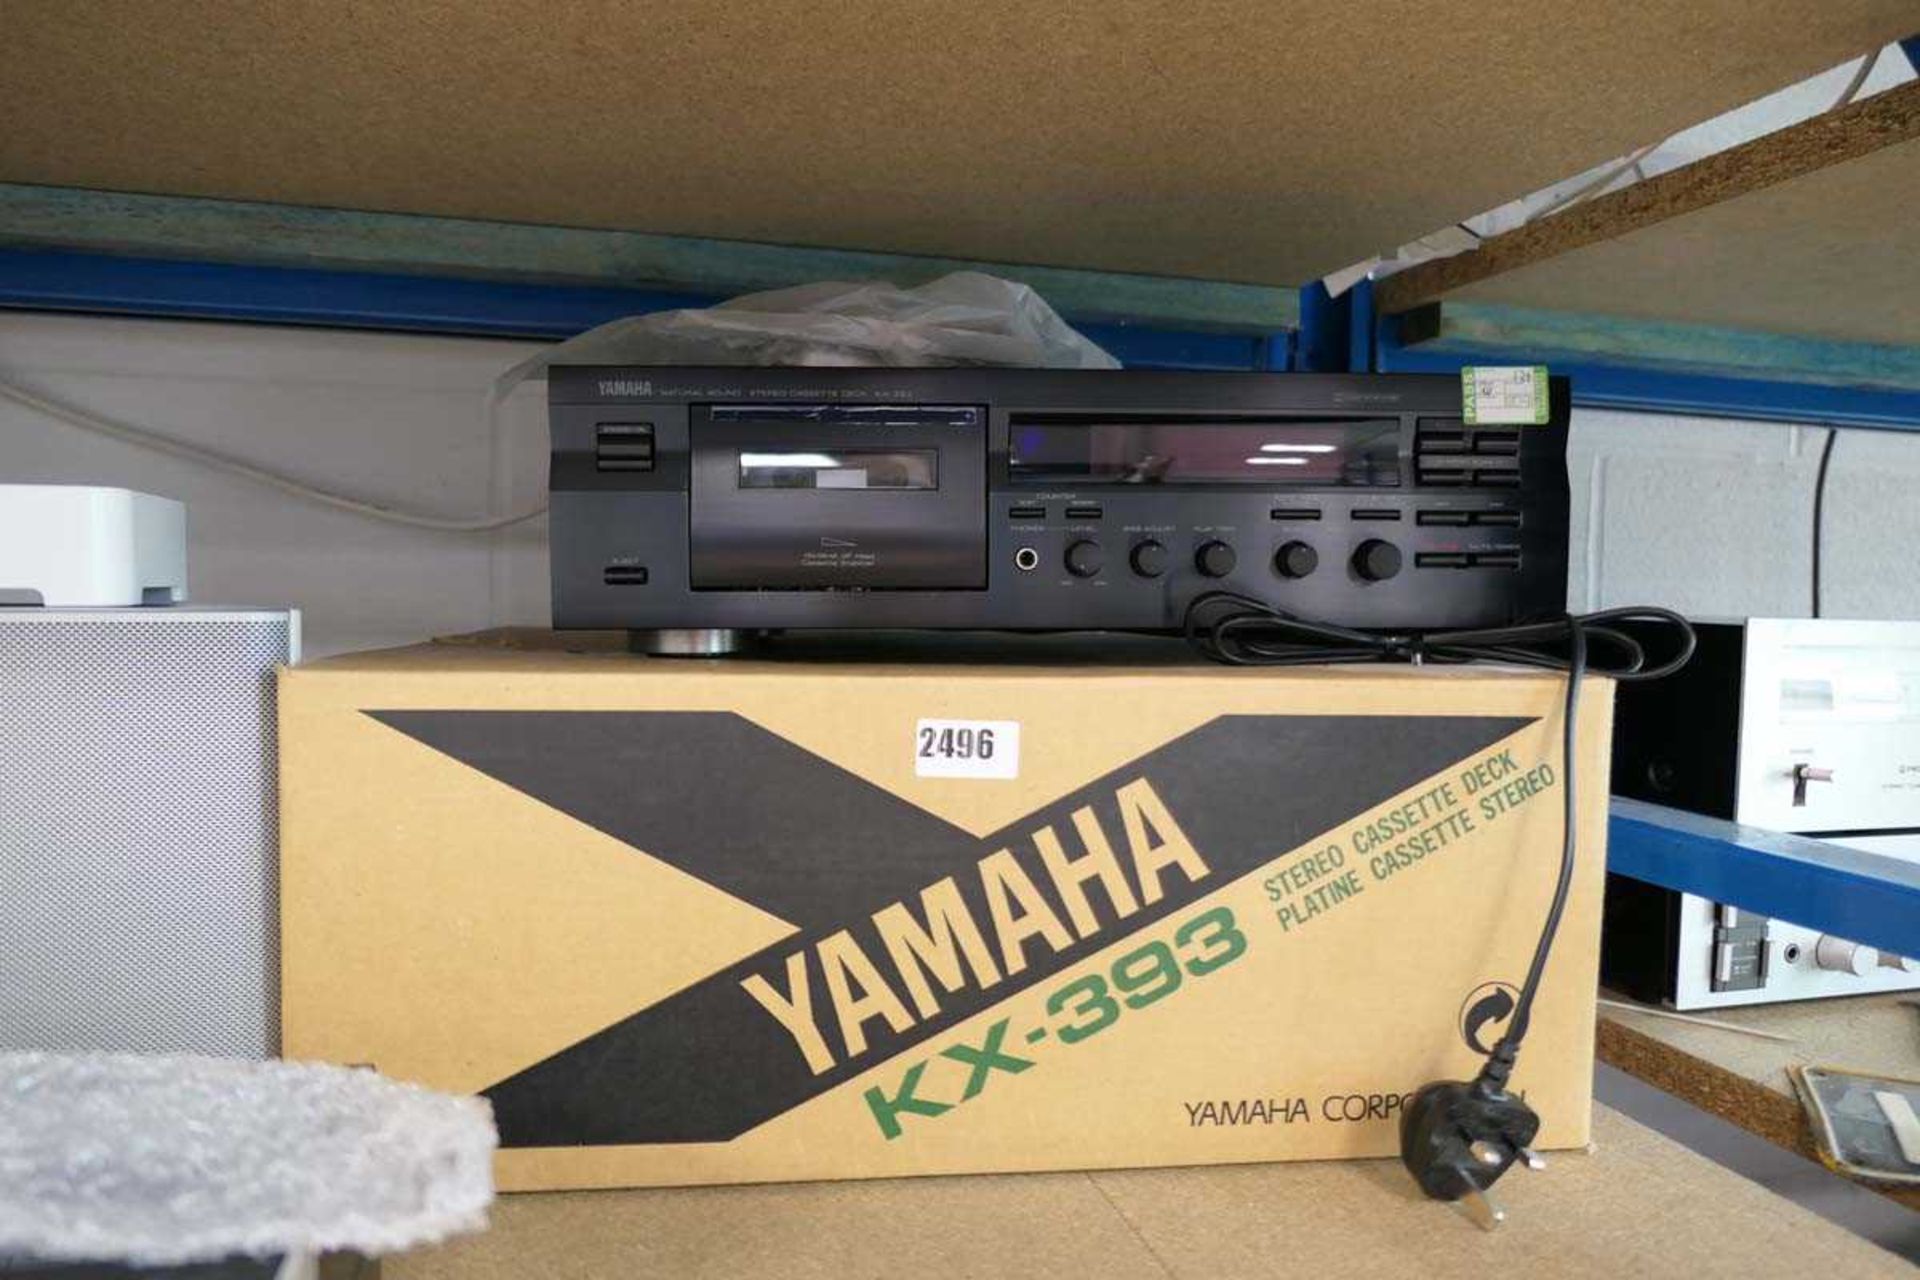 Yamaha natural sounds stereo cassette deck model KX-393